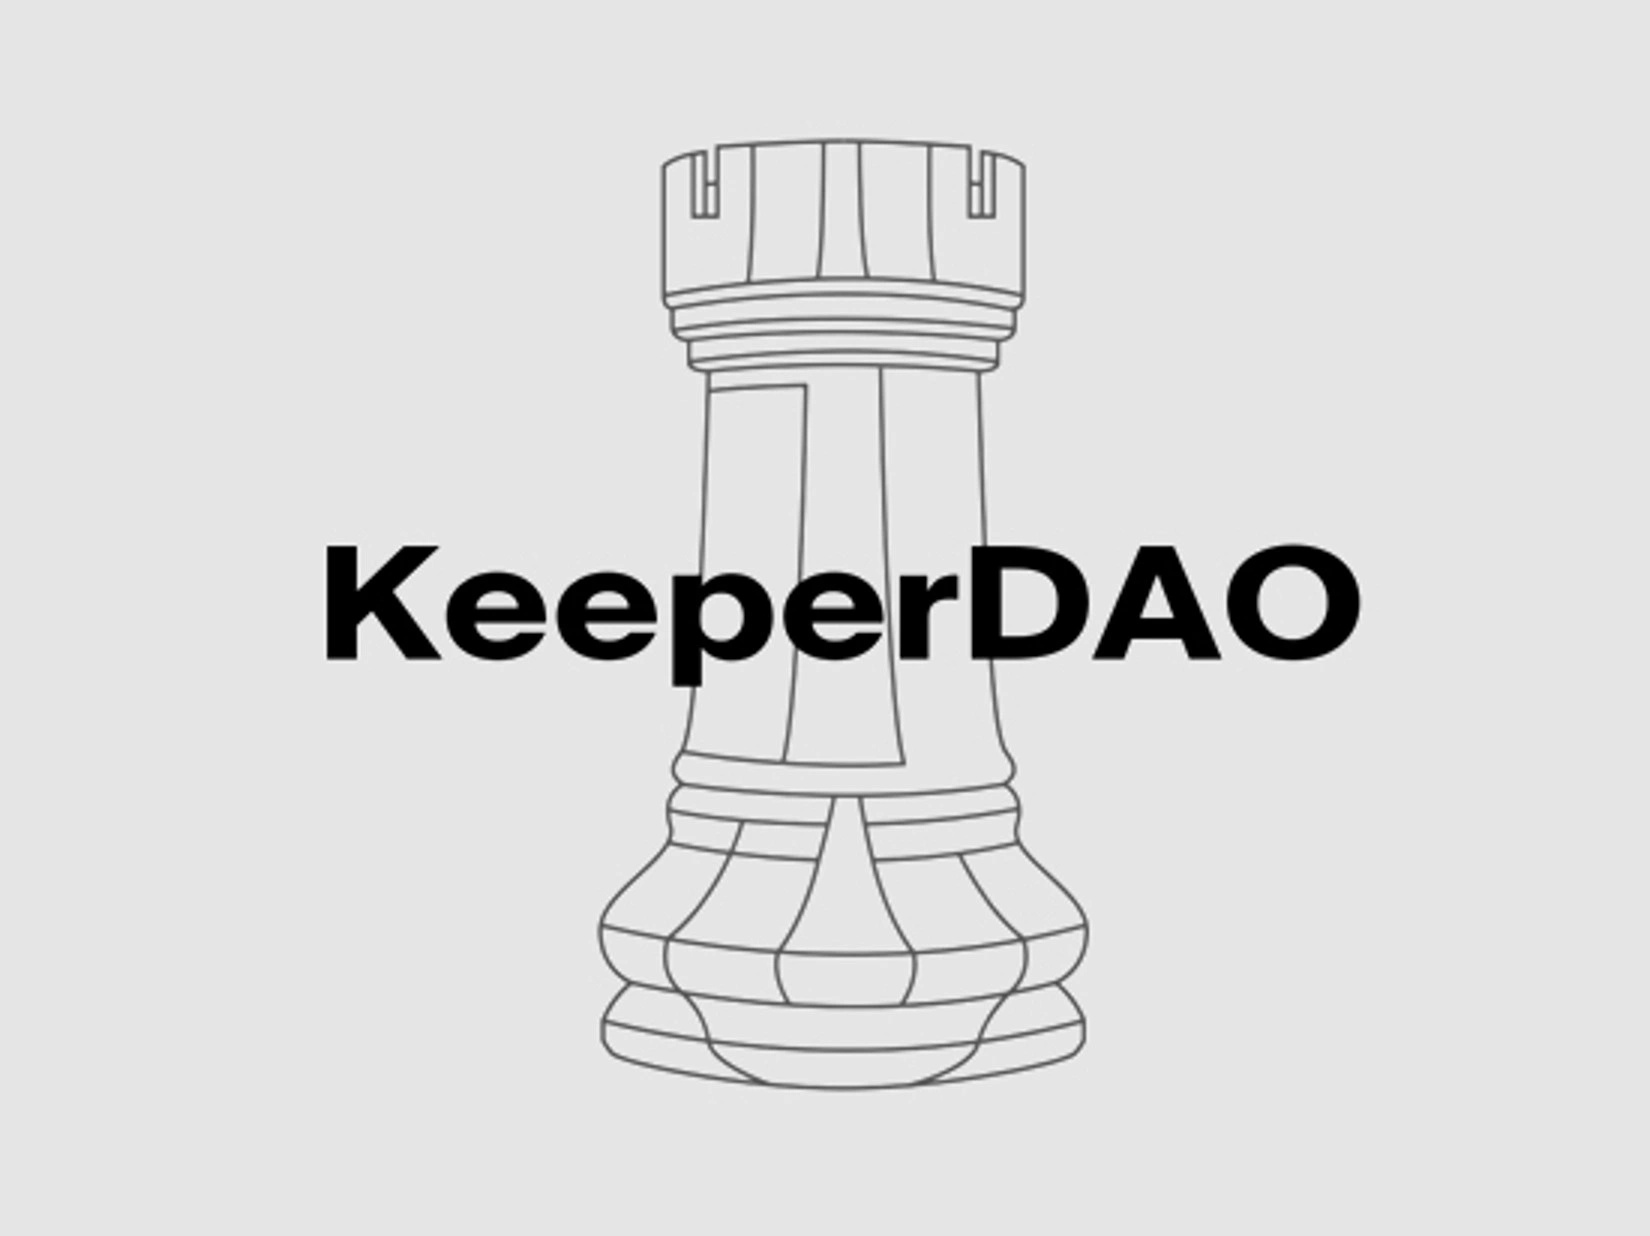 KeeperDAO